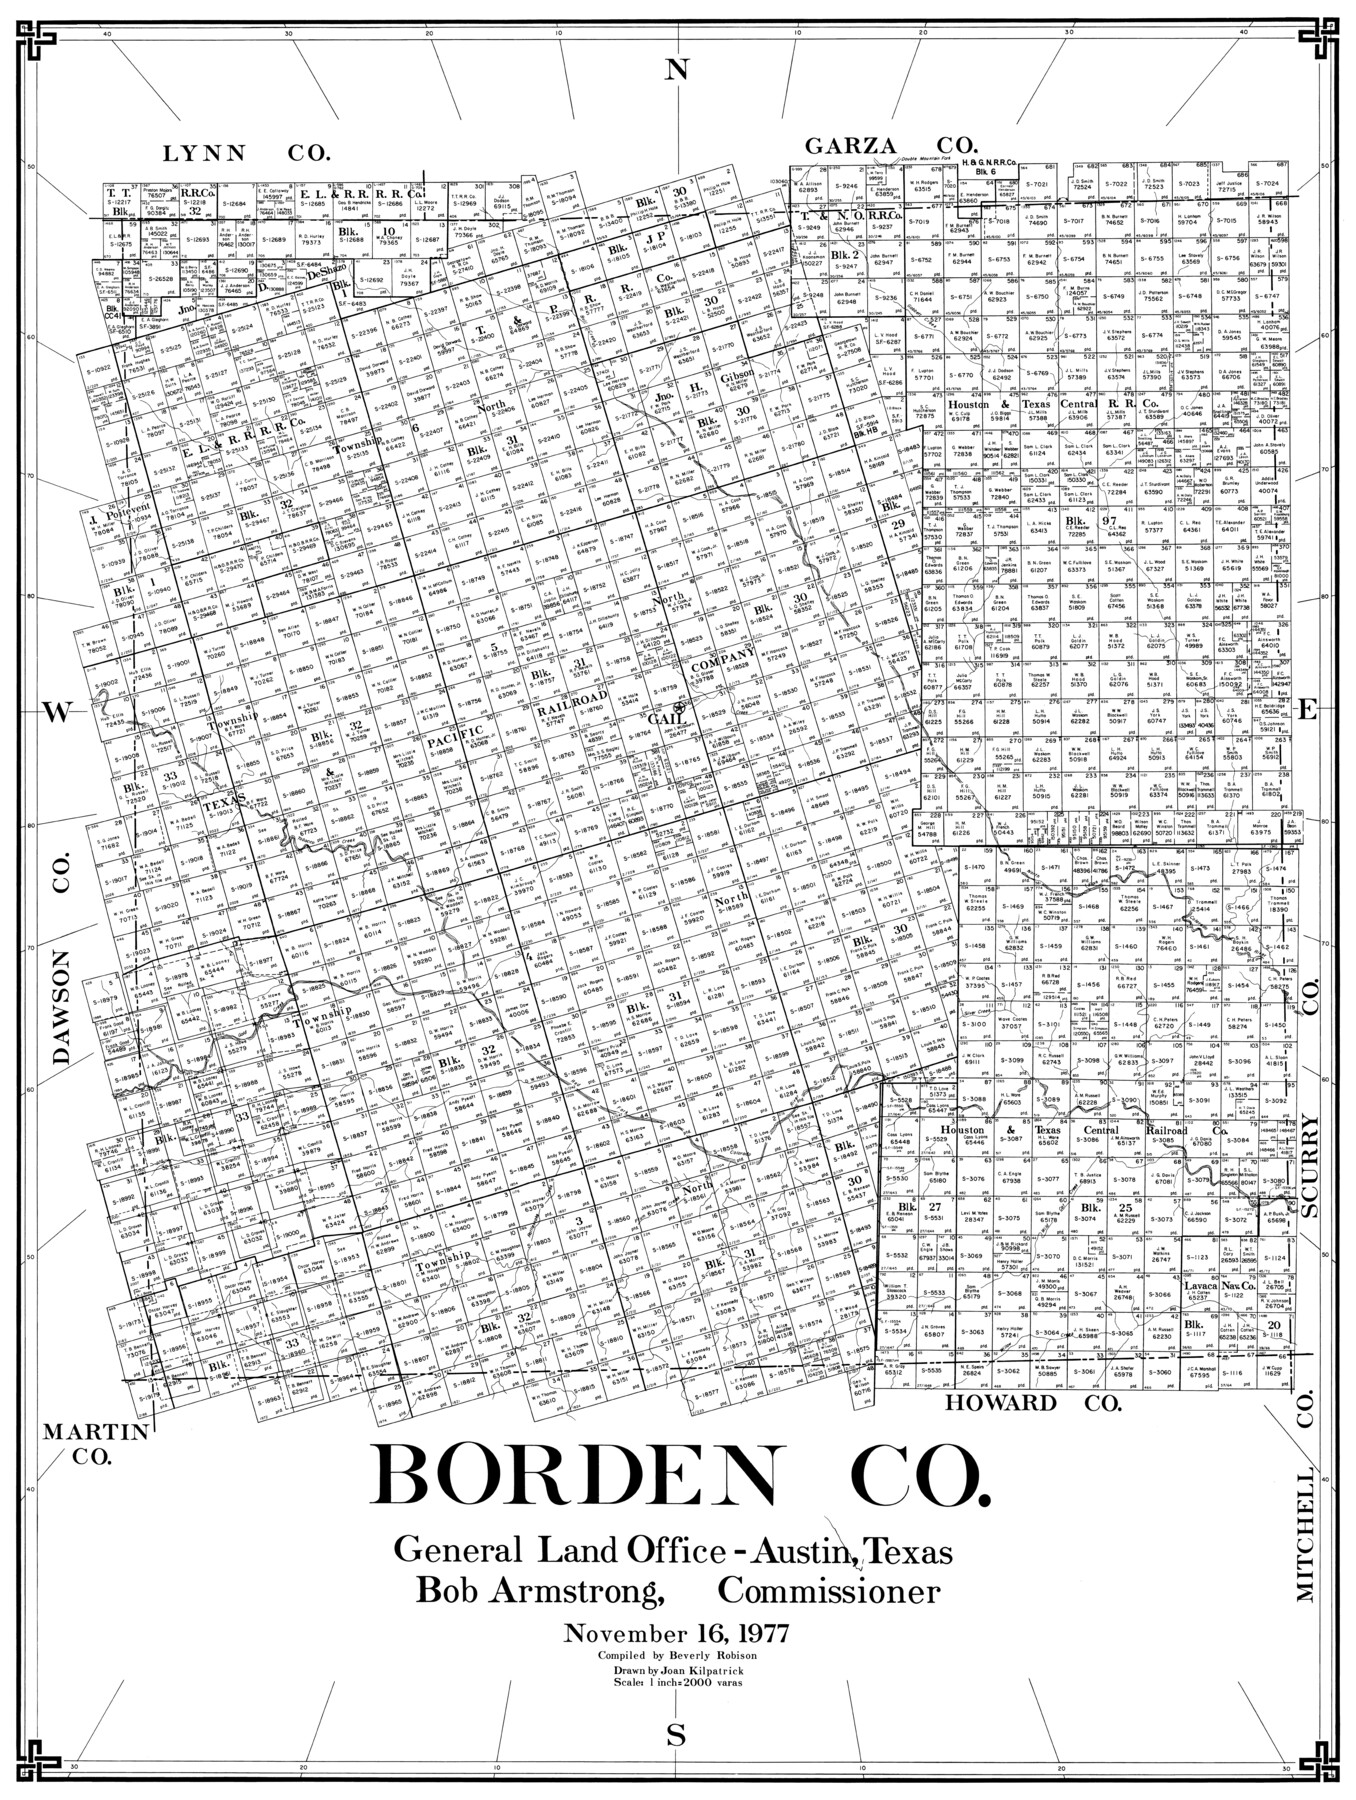 77214, Borden Co., General Map Collection